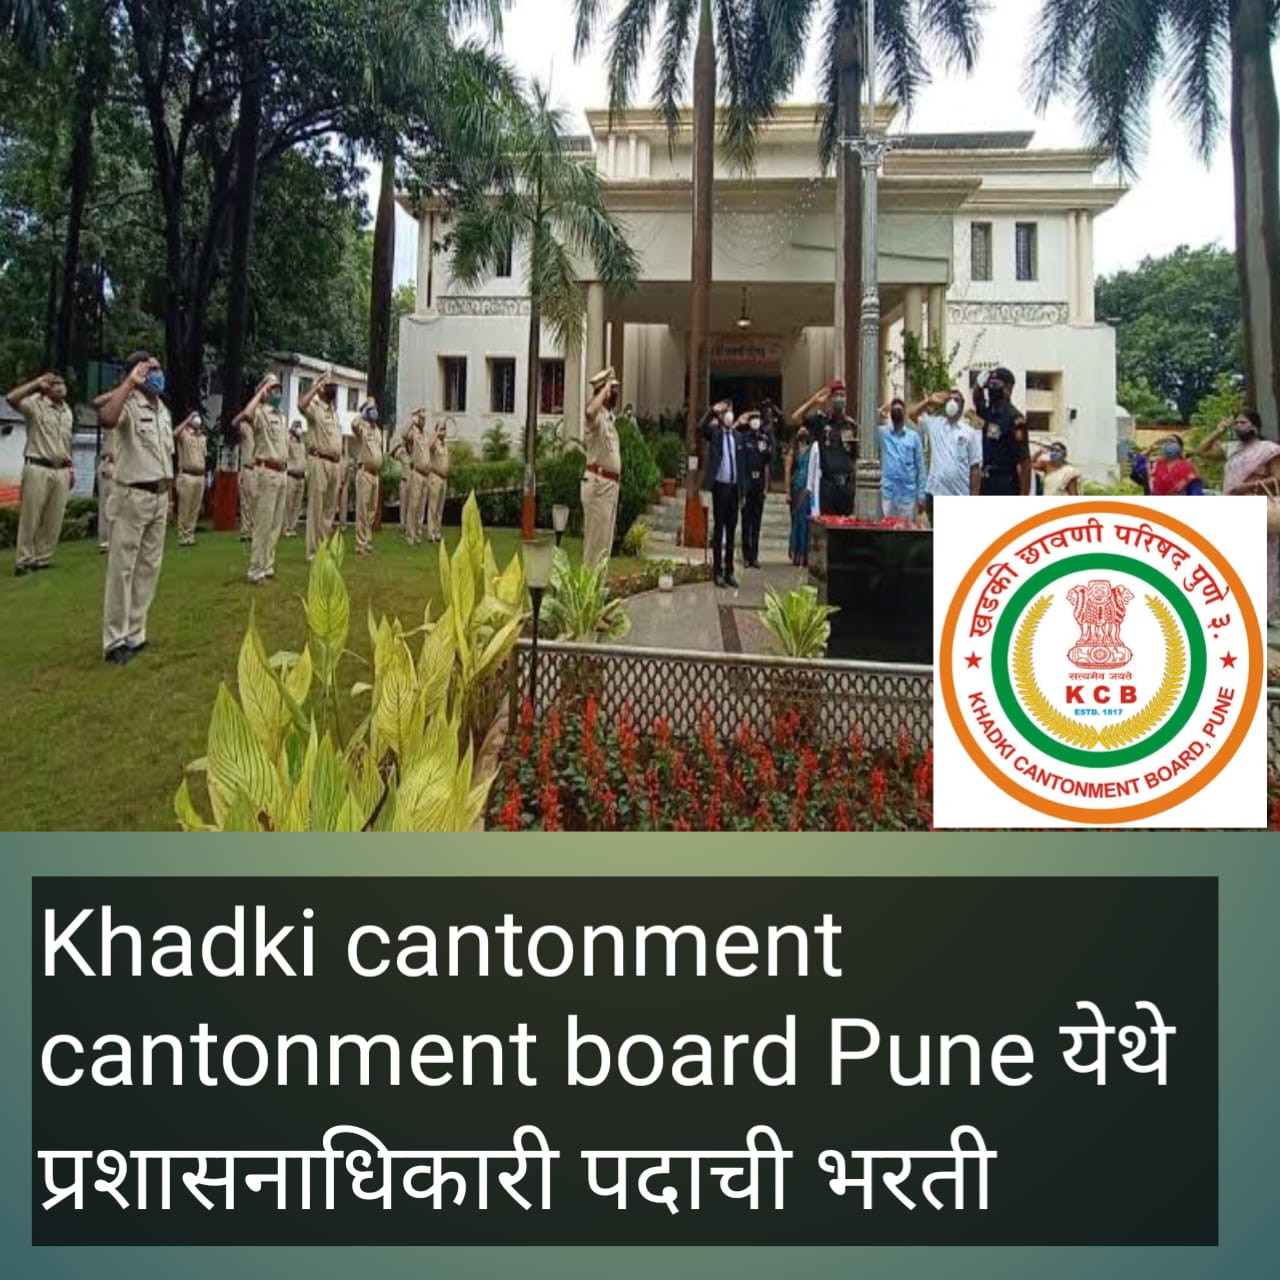 Khadki cantonment board Pune recruitment